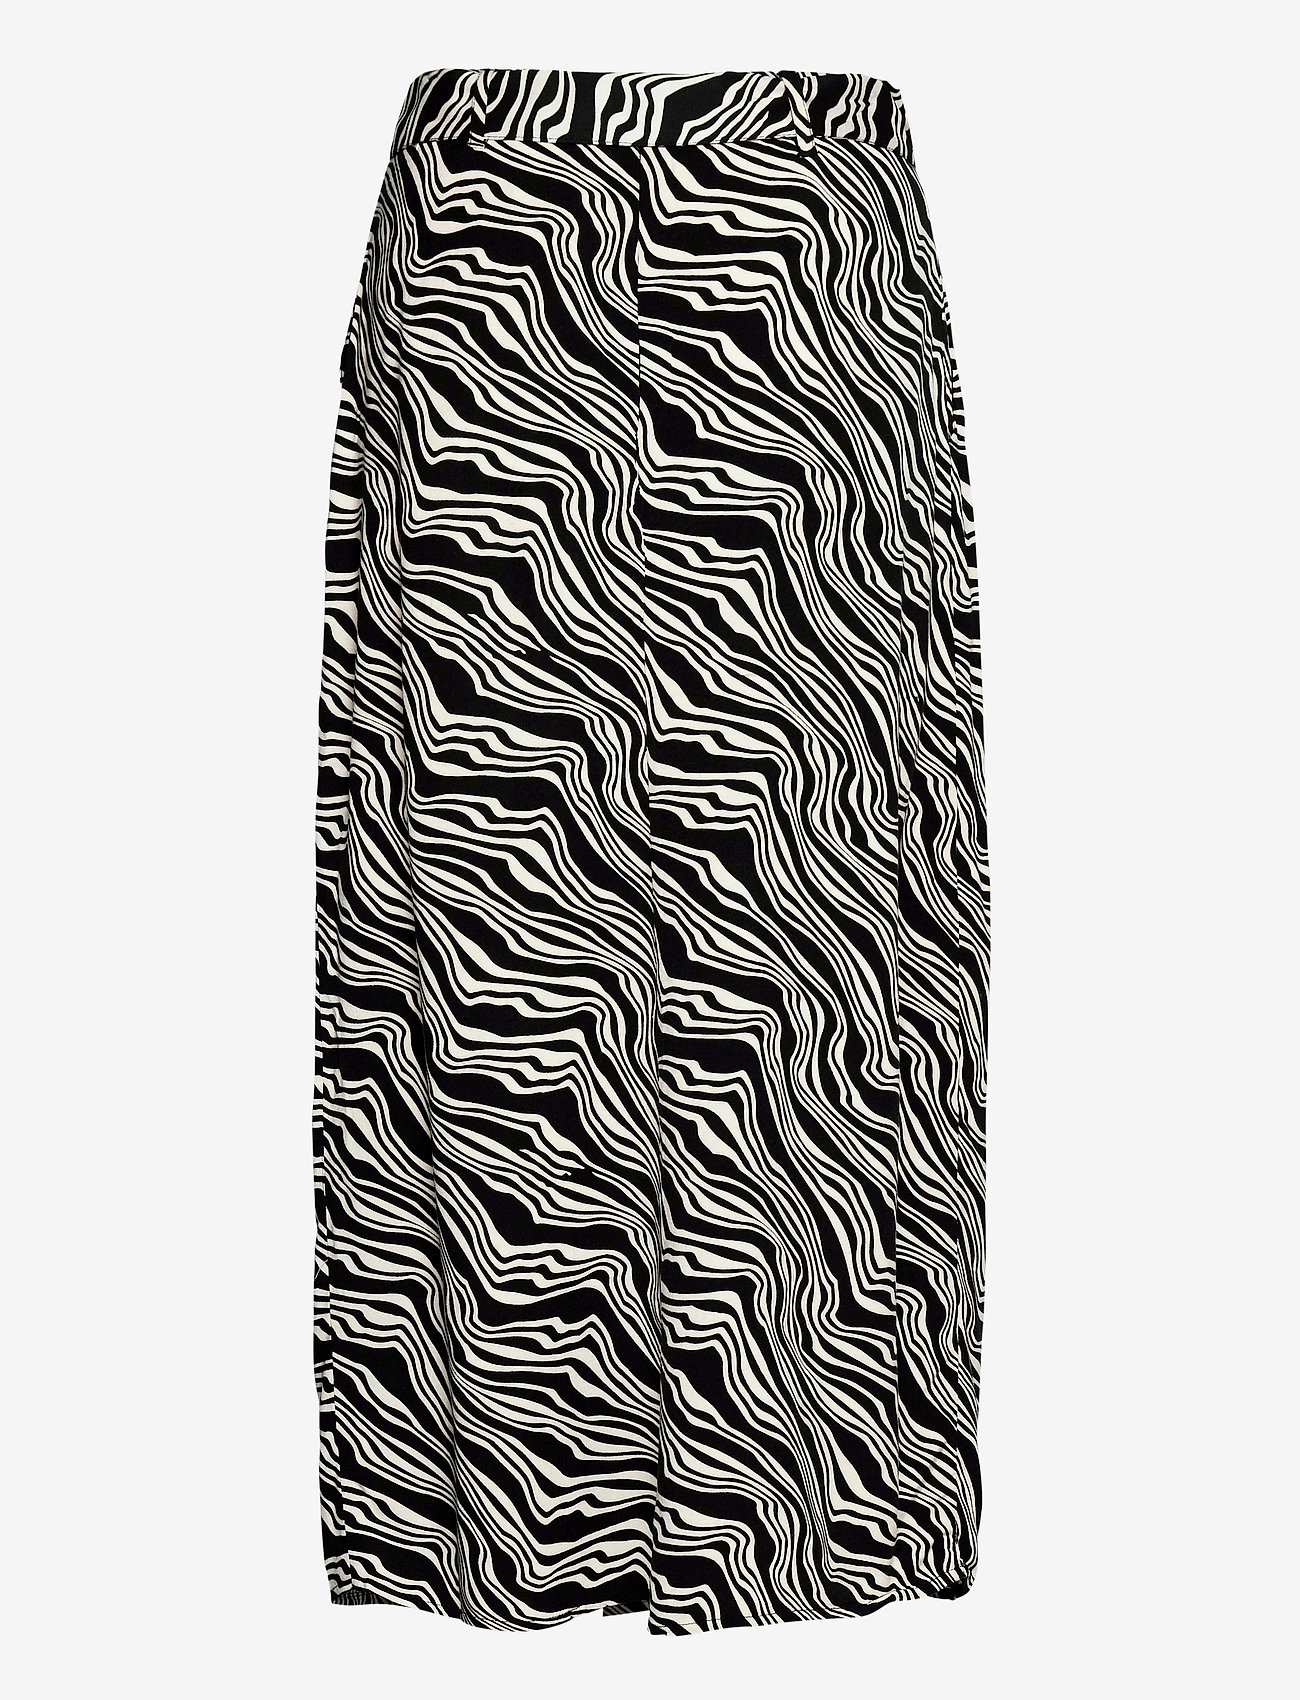 Tom Tailor - skirt with with wrap detail - ilgi sijonai - black wavy design - 1